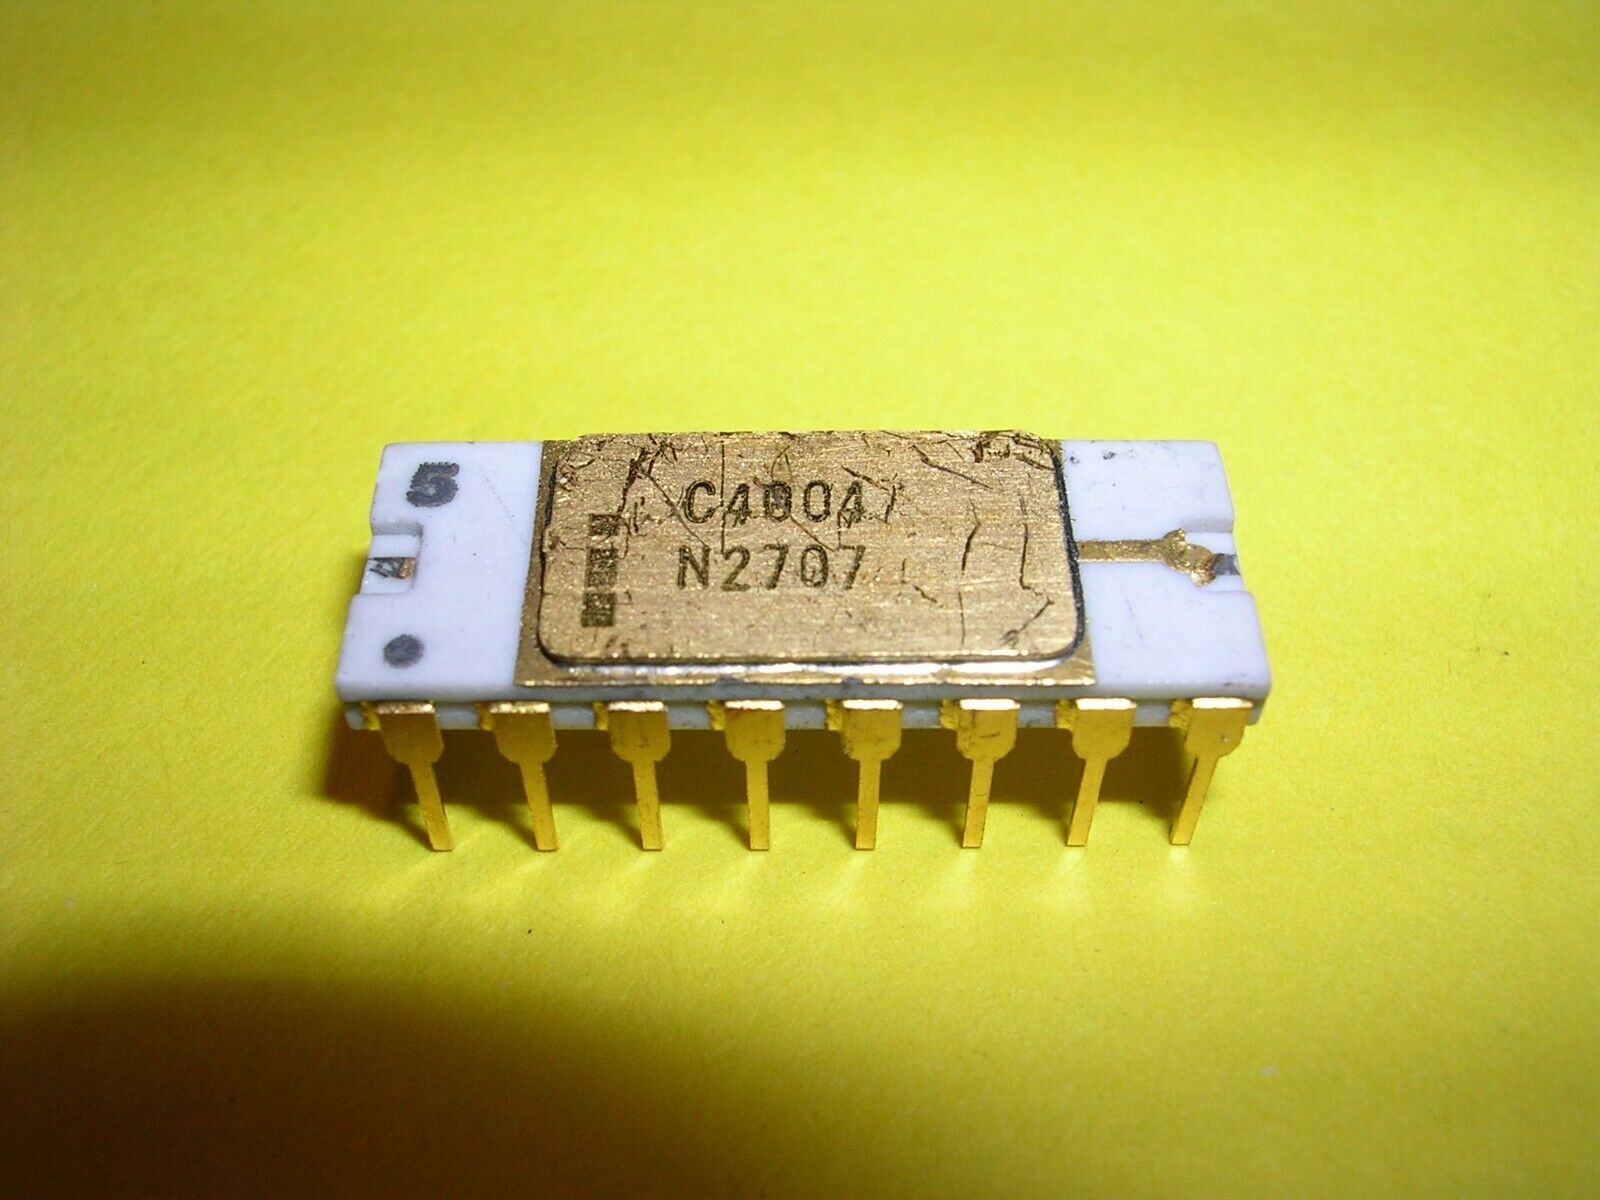 Intel C4004 in White Ceramic Package - World's First Microprocessor - Ex. Rare